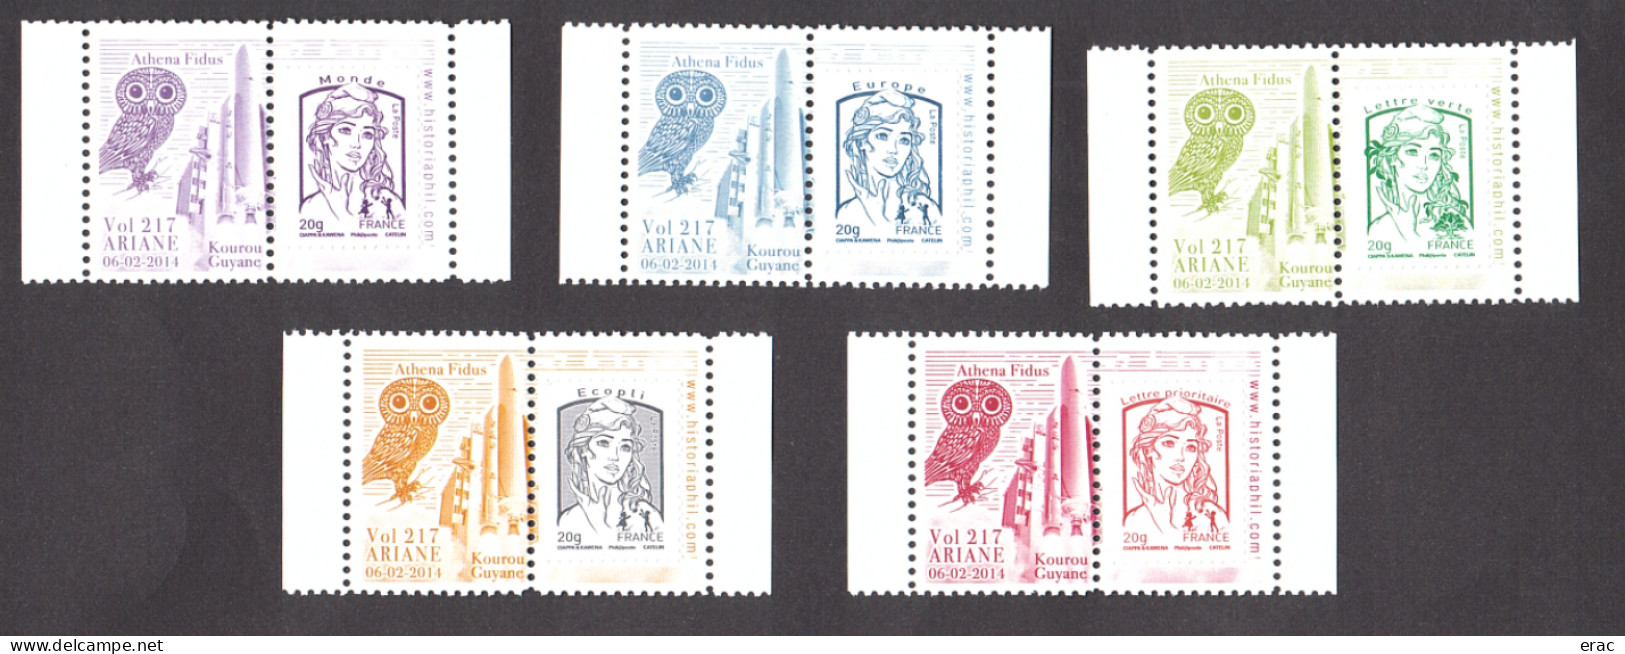 5 Porte-timbres Gommés - 2014 Ariane Vol 217 - Athena Fidus- Avec TVP Marianne De Ciappa & Kawena Neufs - 2013-2018 Marianne (Ciappa-Kawena)